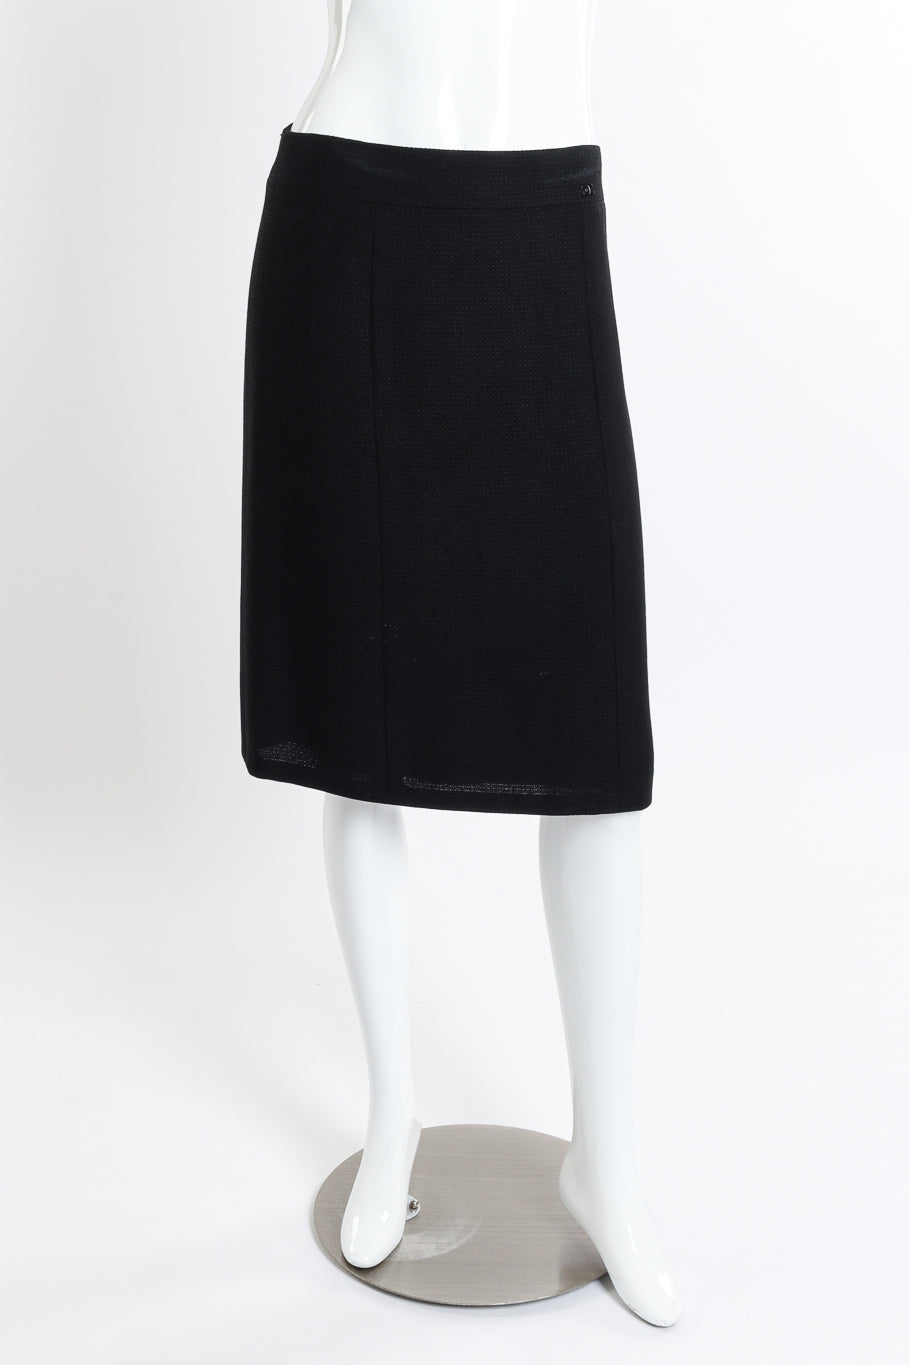 Chanel 2007C S/S Peplum Skirt Suit skirt front on mannequin @recessla